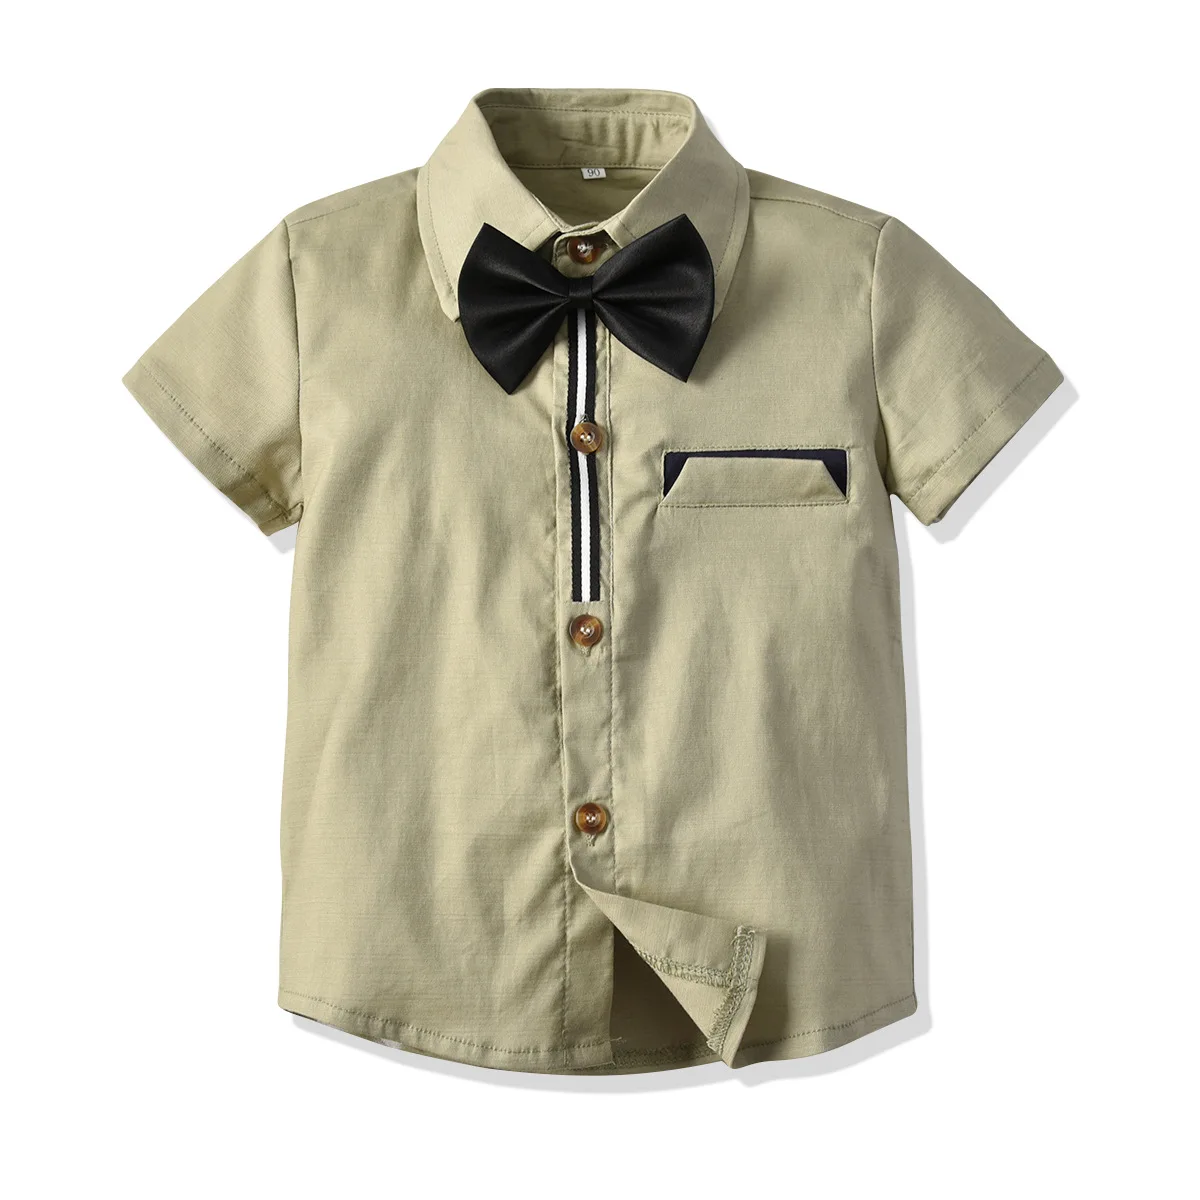 BOY'S Clothes with Short Sleeves Cotton Shirt New Style Gentleman Bowtie Childrenswear CHILDREN'S Shirt Child Cardigan Two-Piece